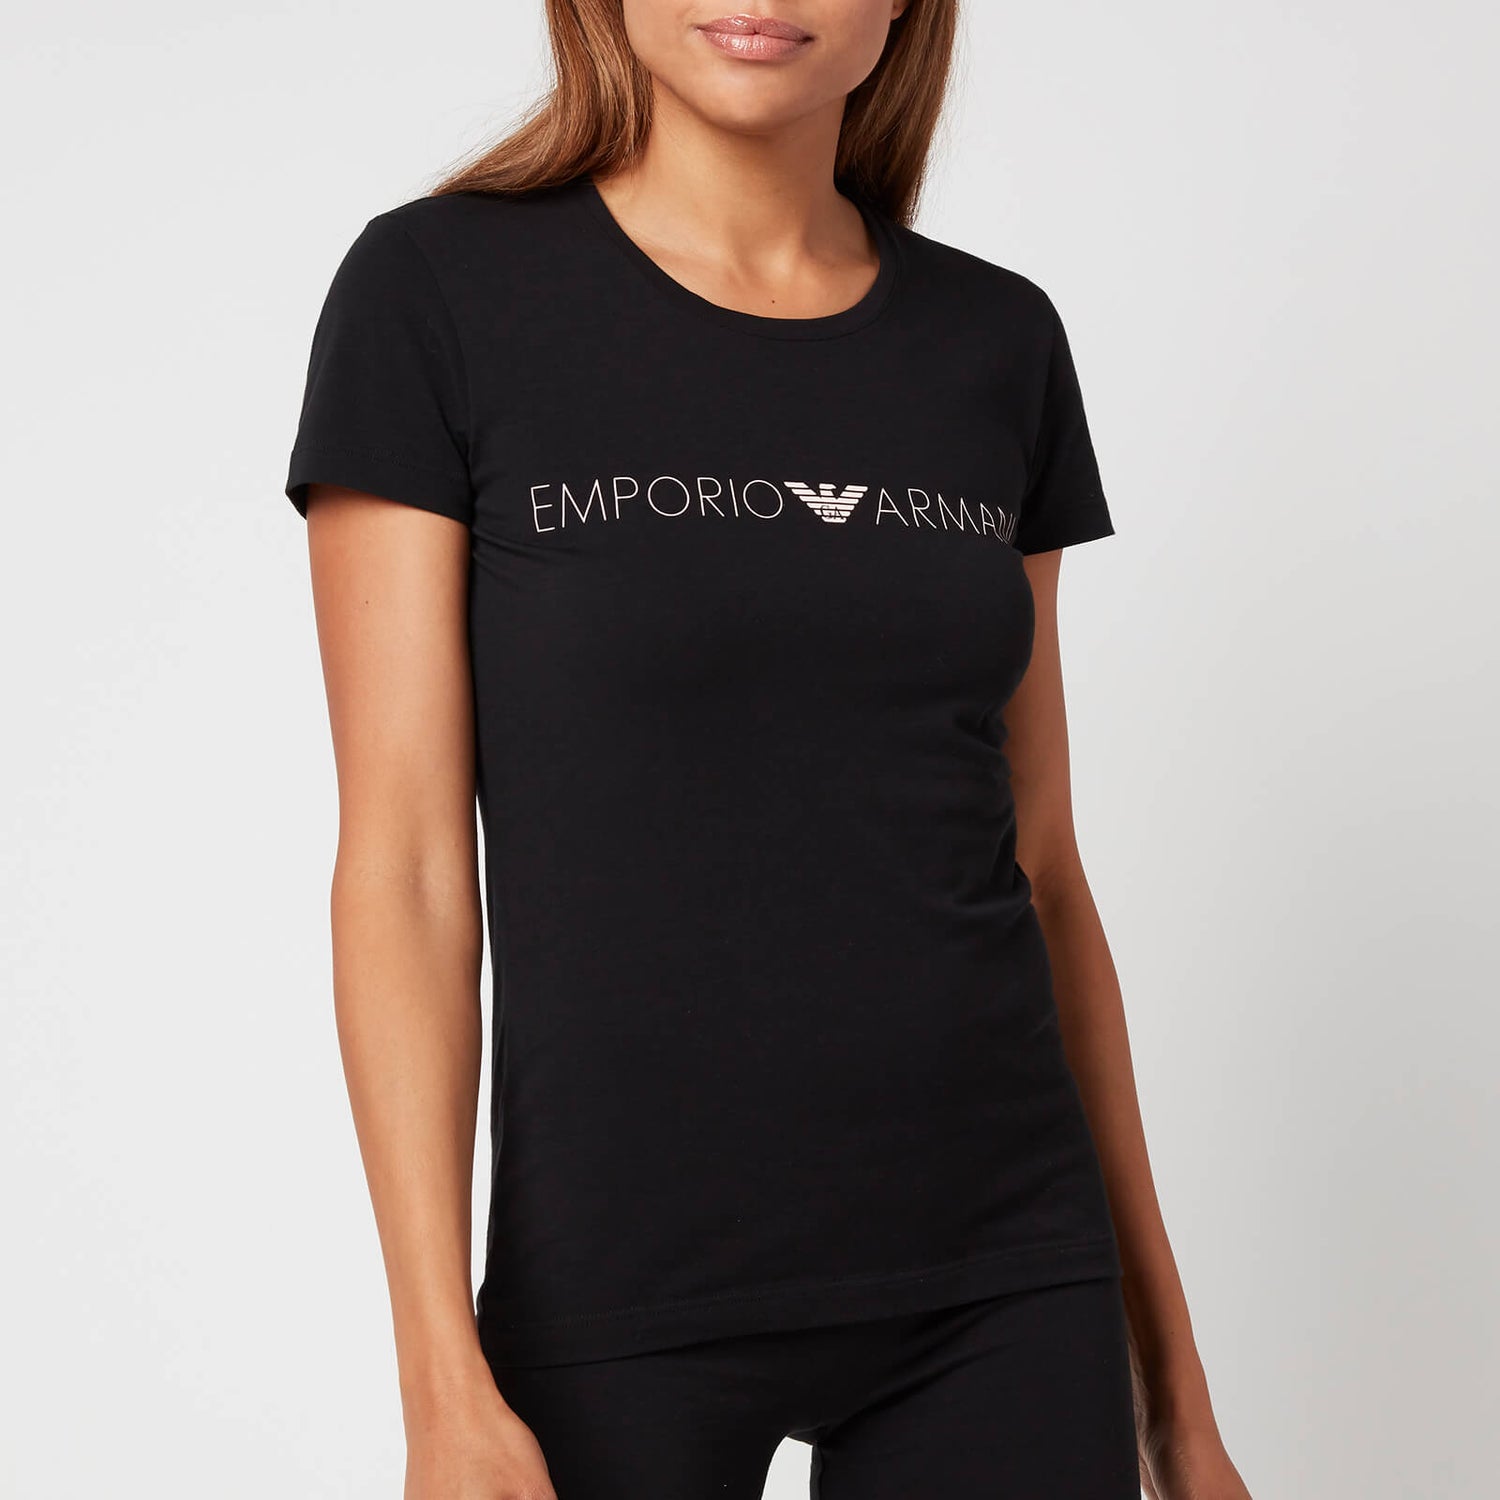 Emporio Armani Loungewear Women's Iconic Logoband T-Shirt - Black